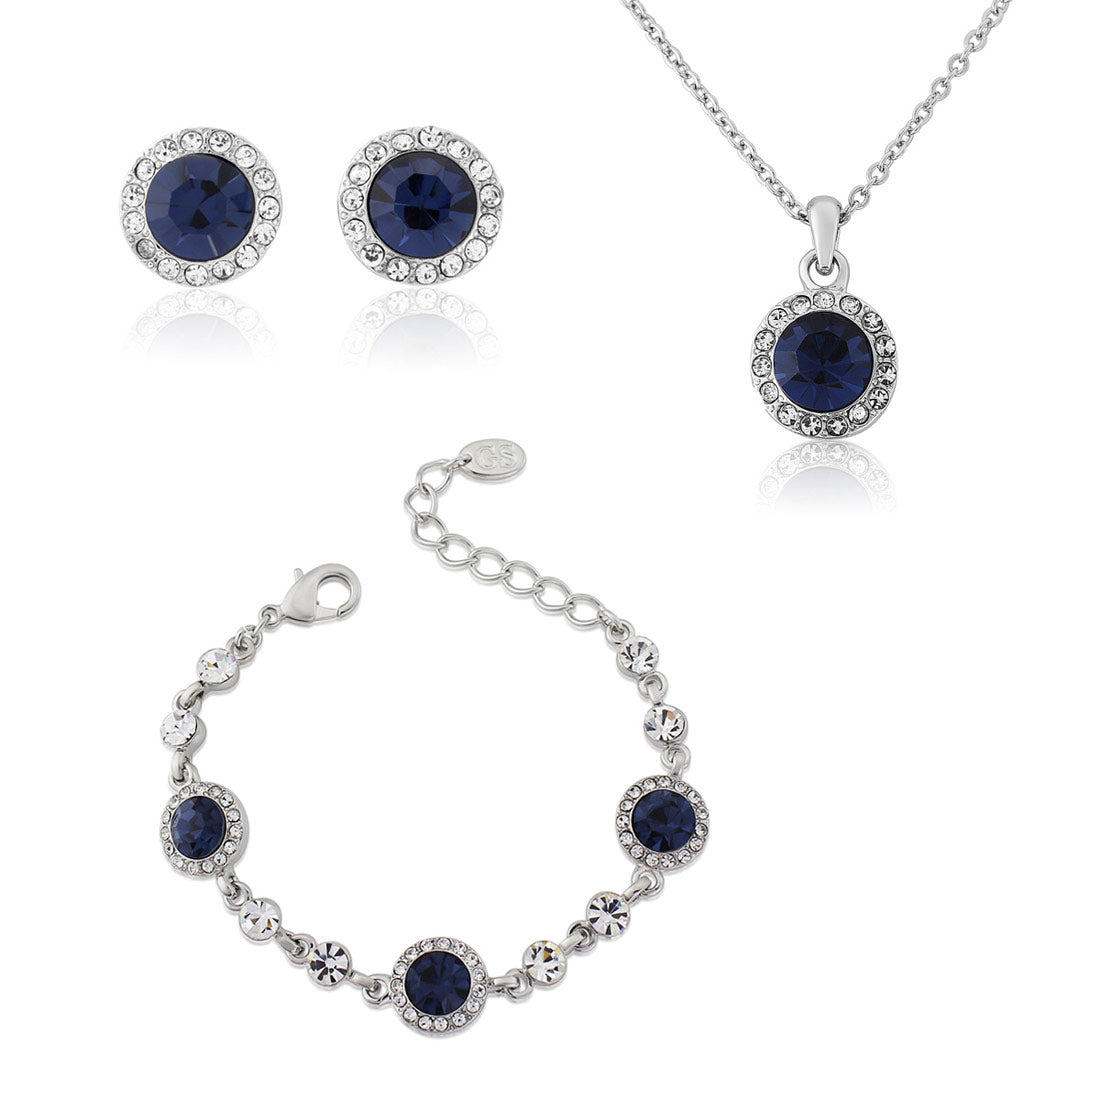 Moonlight Shimmer Navy Jewellery Set featuring earrings, bracelet and pendant